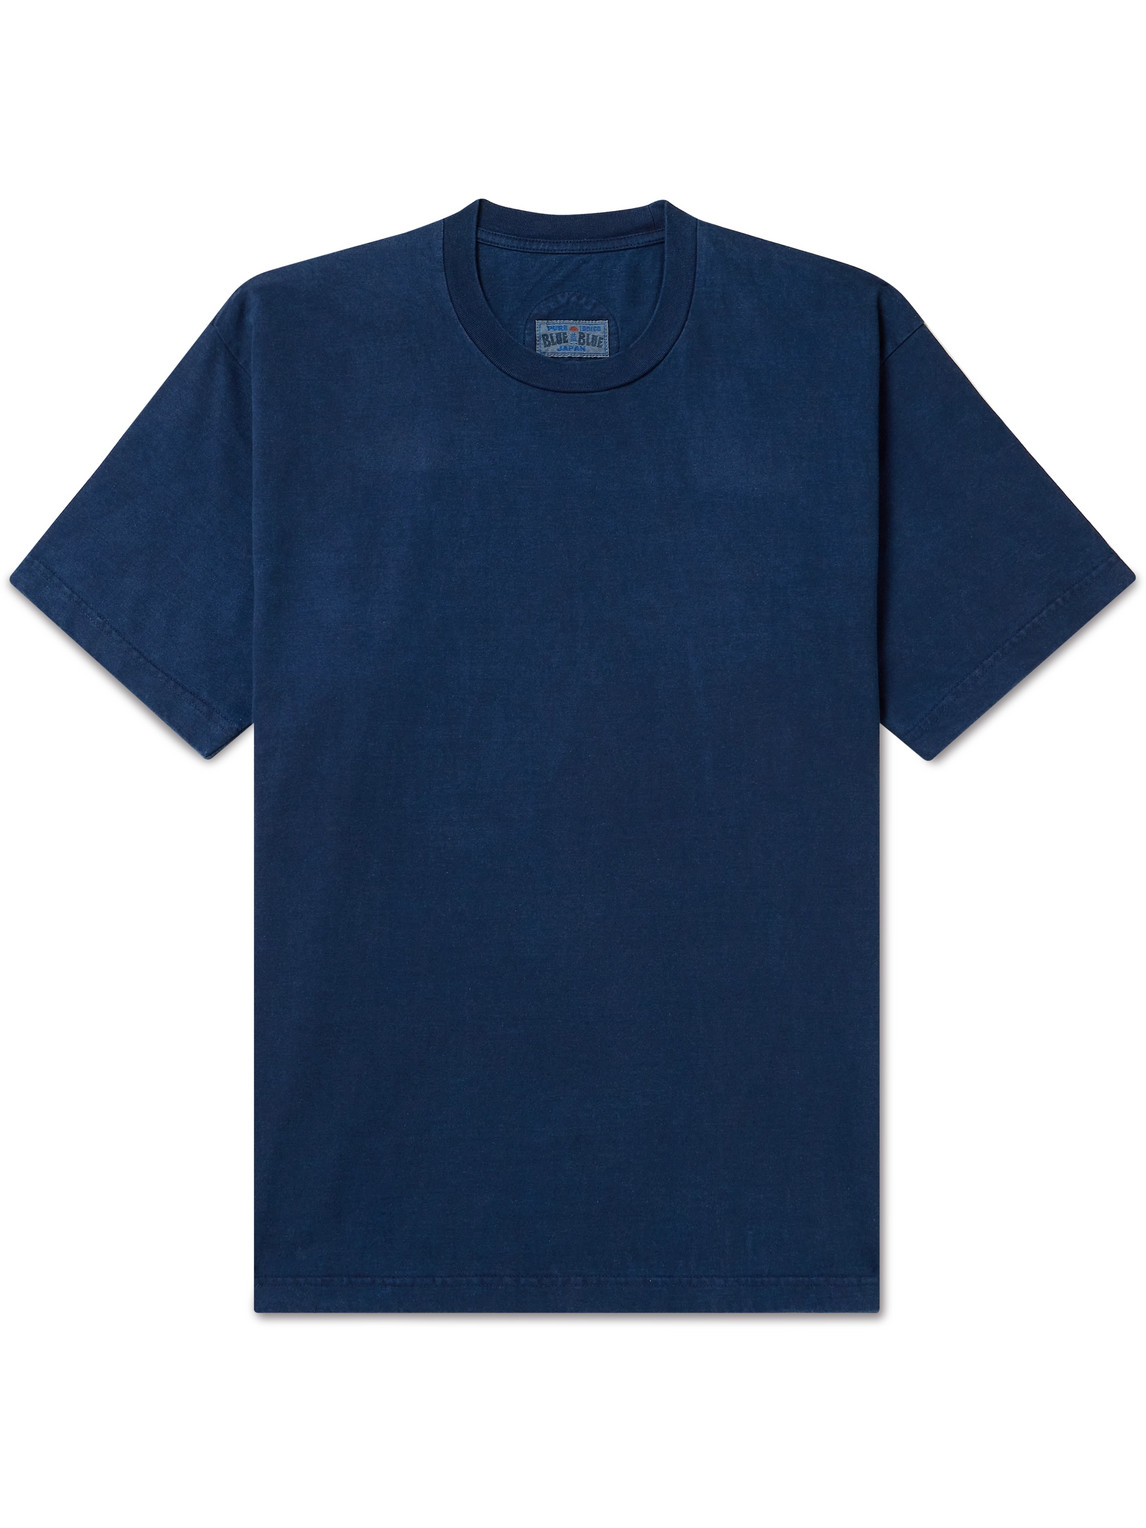 Indigo-Dyed Cotton-Jersey T-Shirt